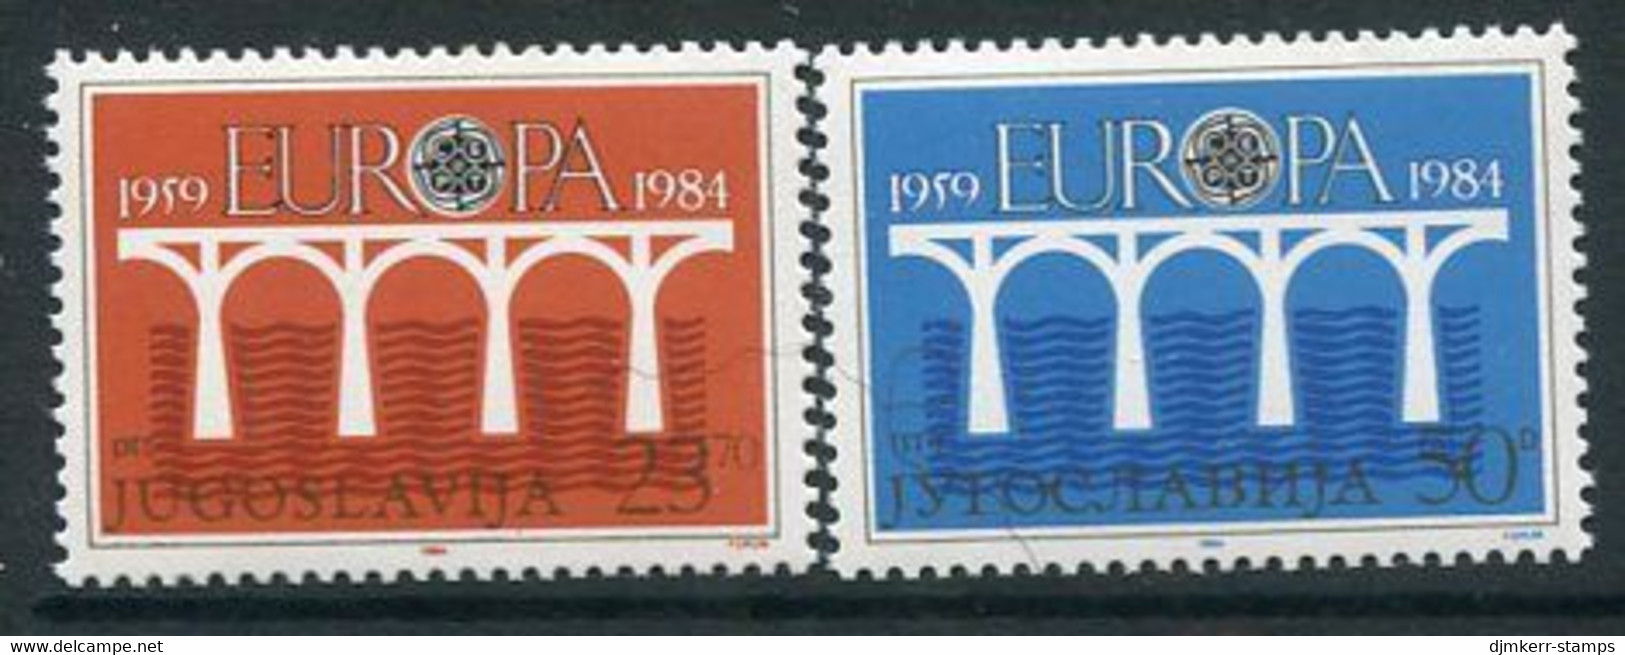 YUGOSLAVIA 1984  Europa: 25th Anniversary Of CEPT  MNH / **.  Michel 2046-47 - Unused Stamps